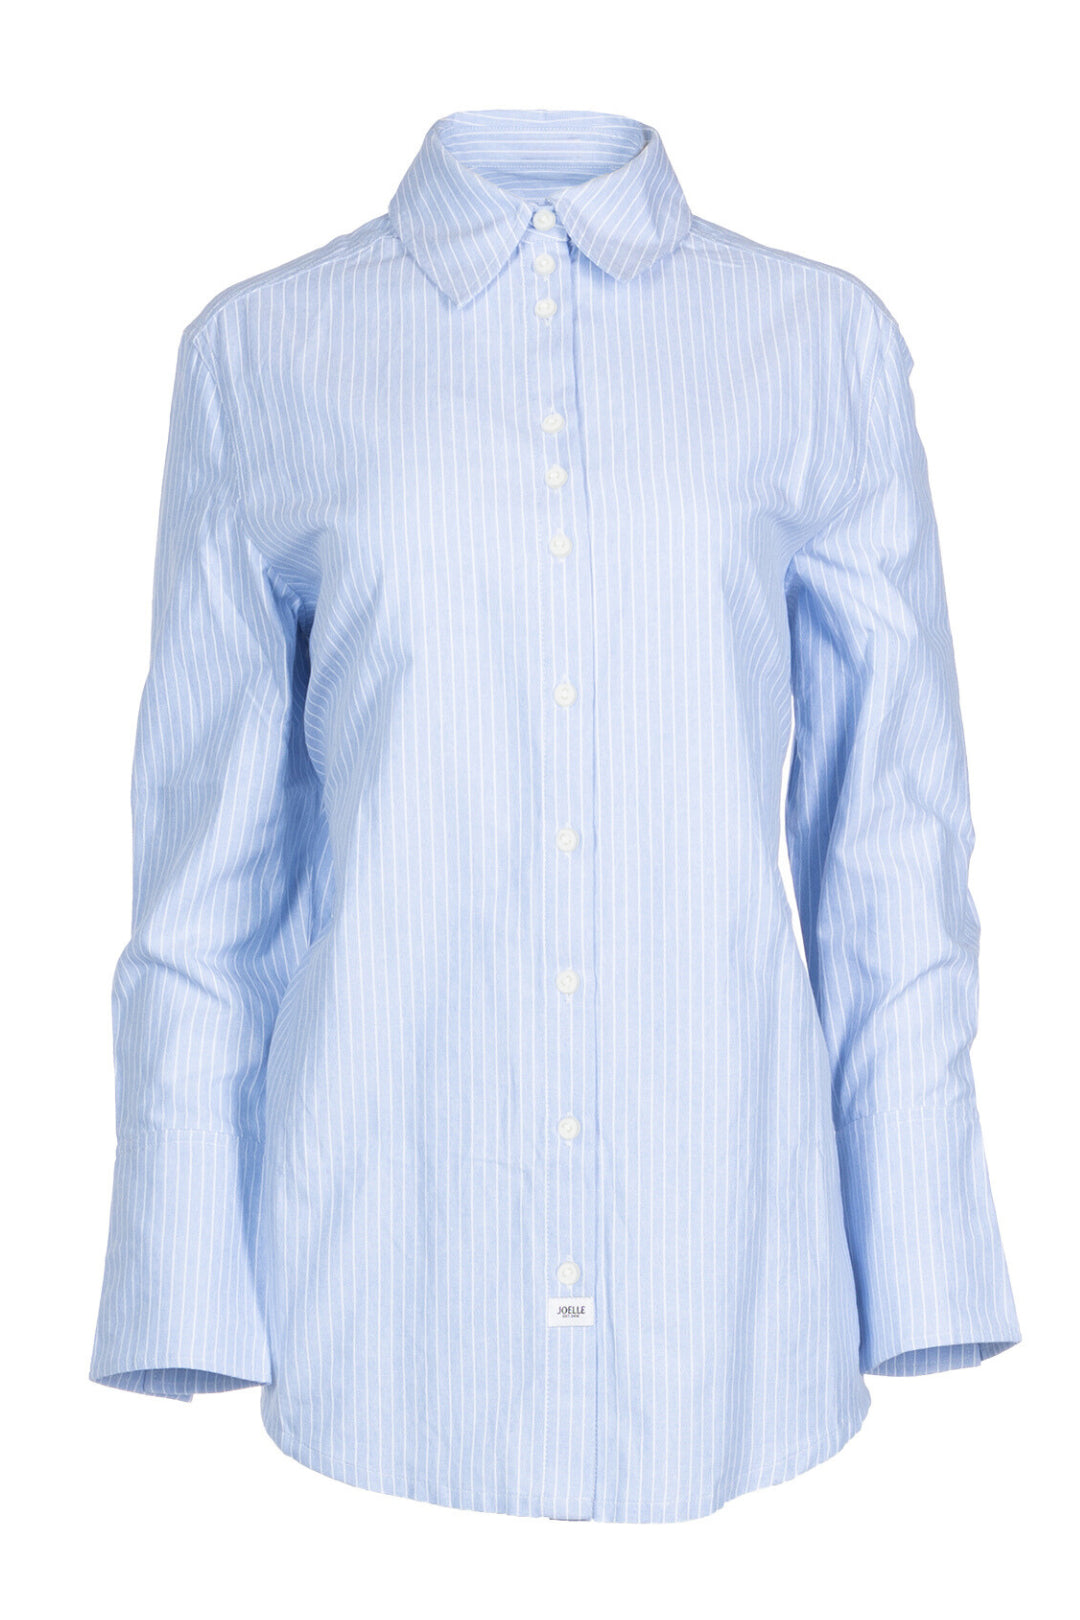 Chemise bleue à rayures | Valentine JOELLE Collection